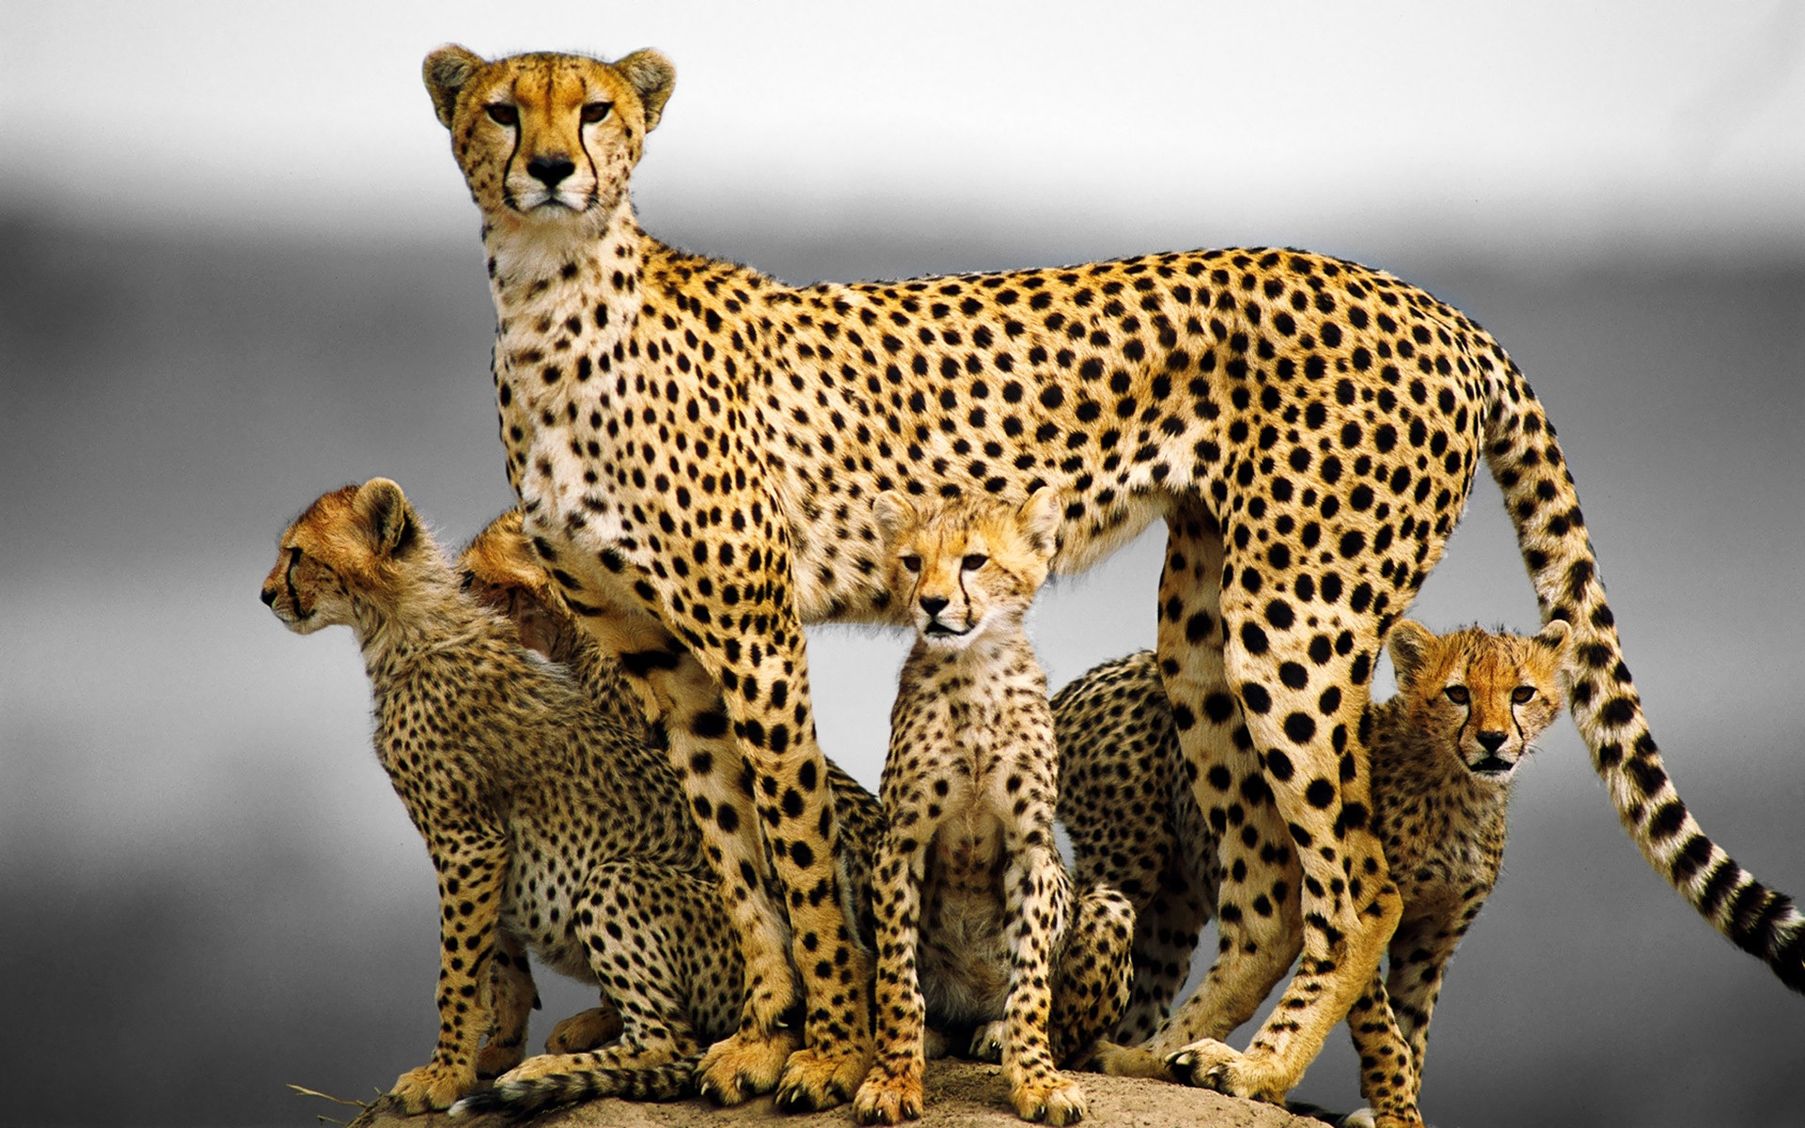 Cheetah_